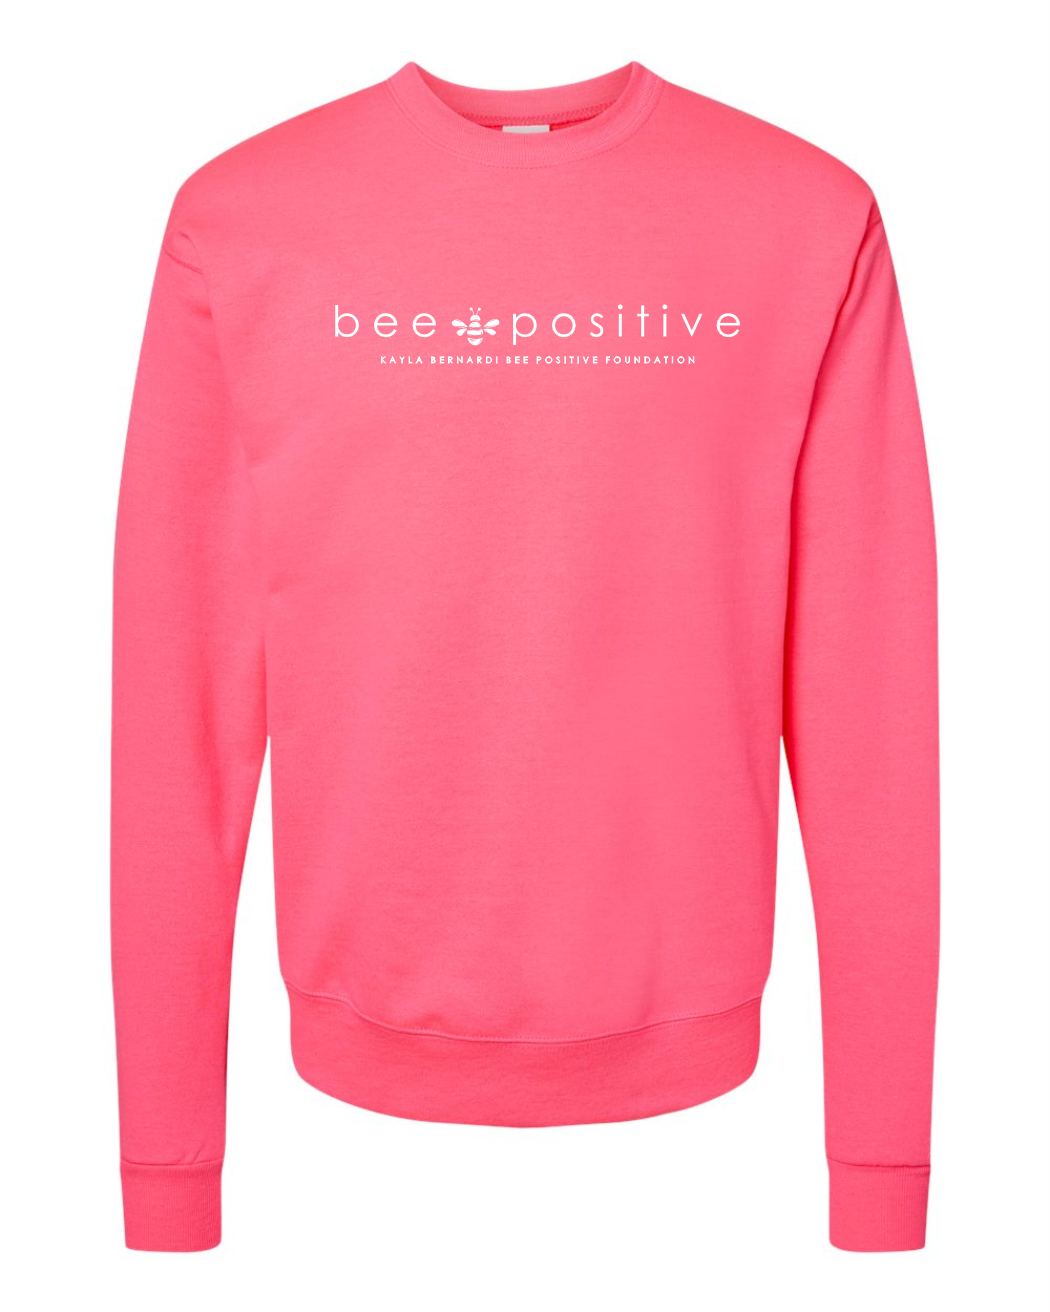 Unisex Pink Crew Sweatshirt